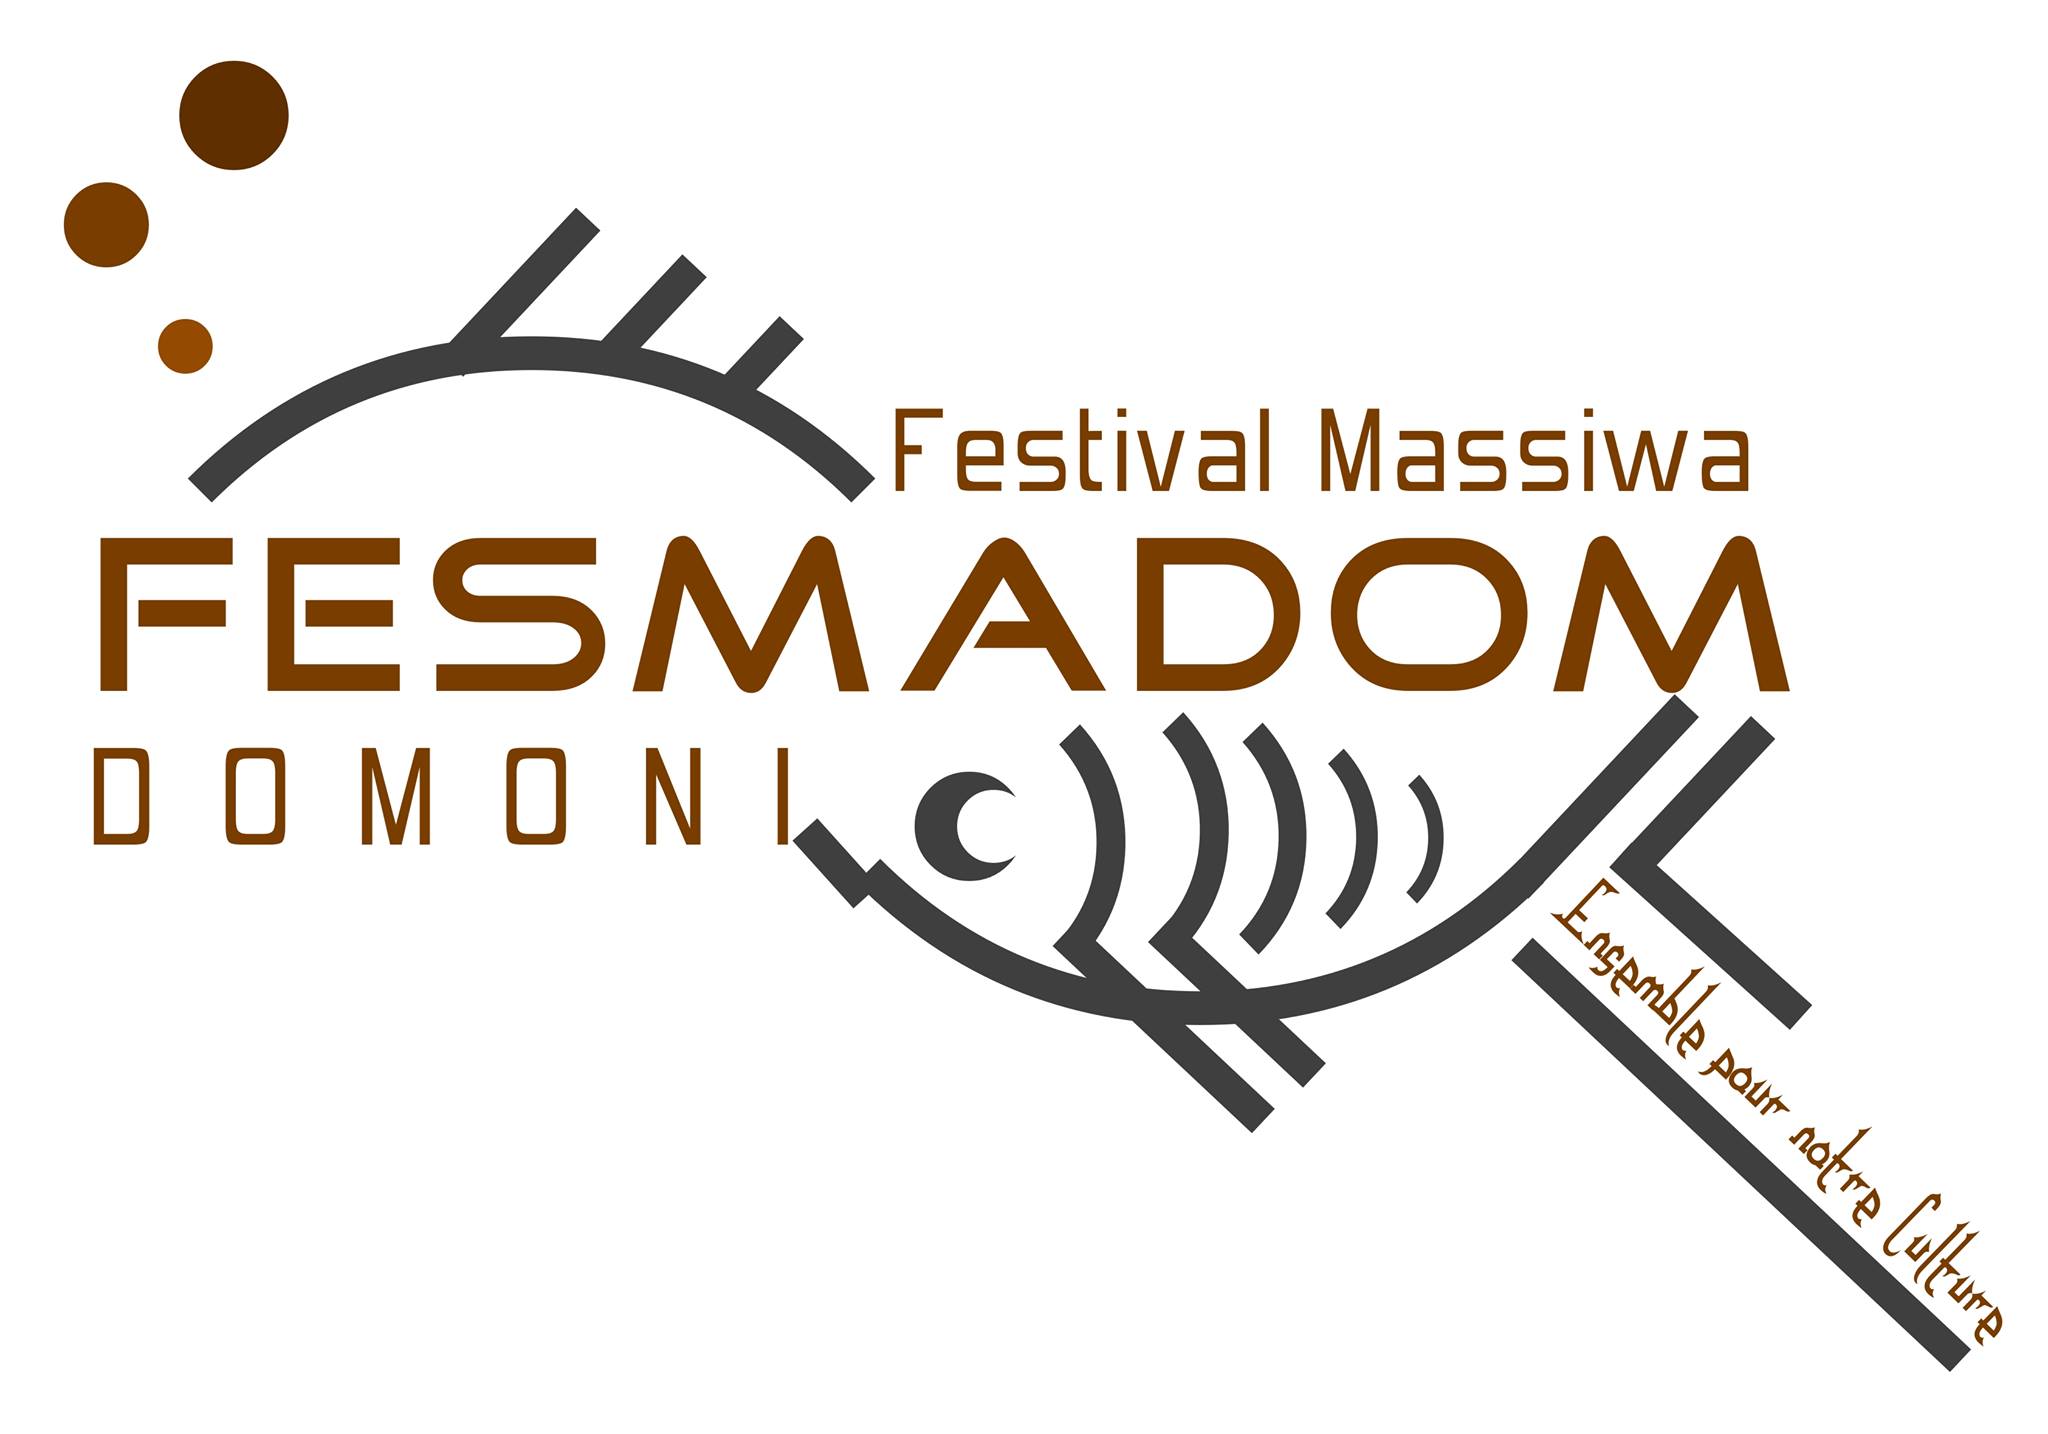 Festival Massiwa Domoni